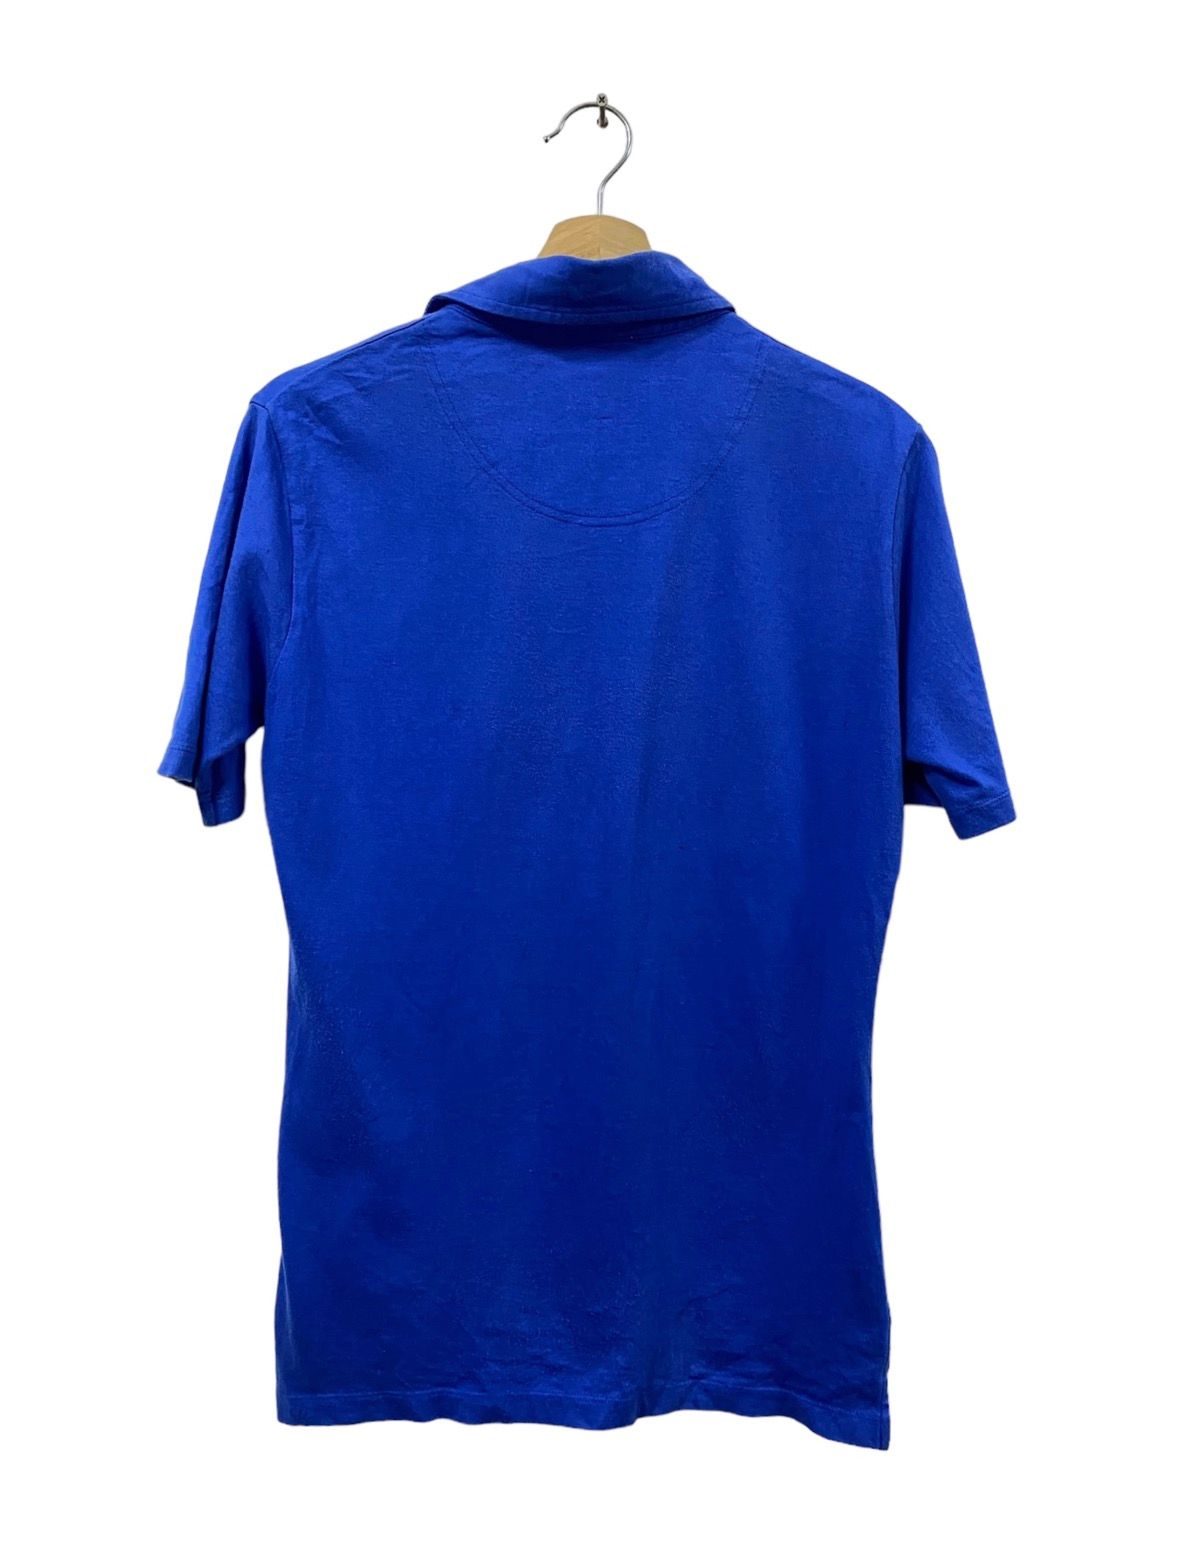 Vivienne Westwood Man Polo Shirt - 2